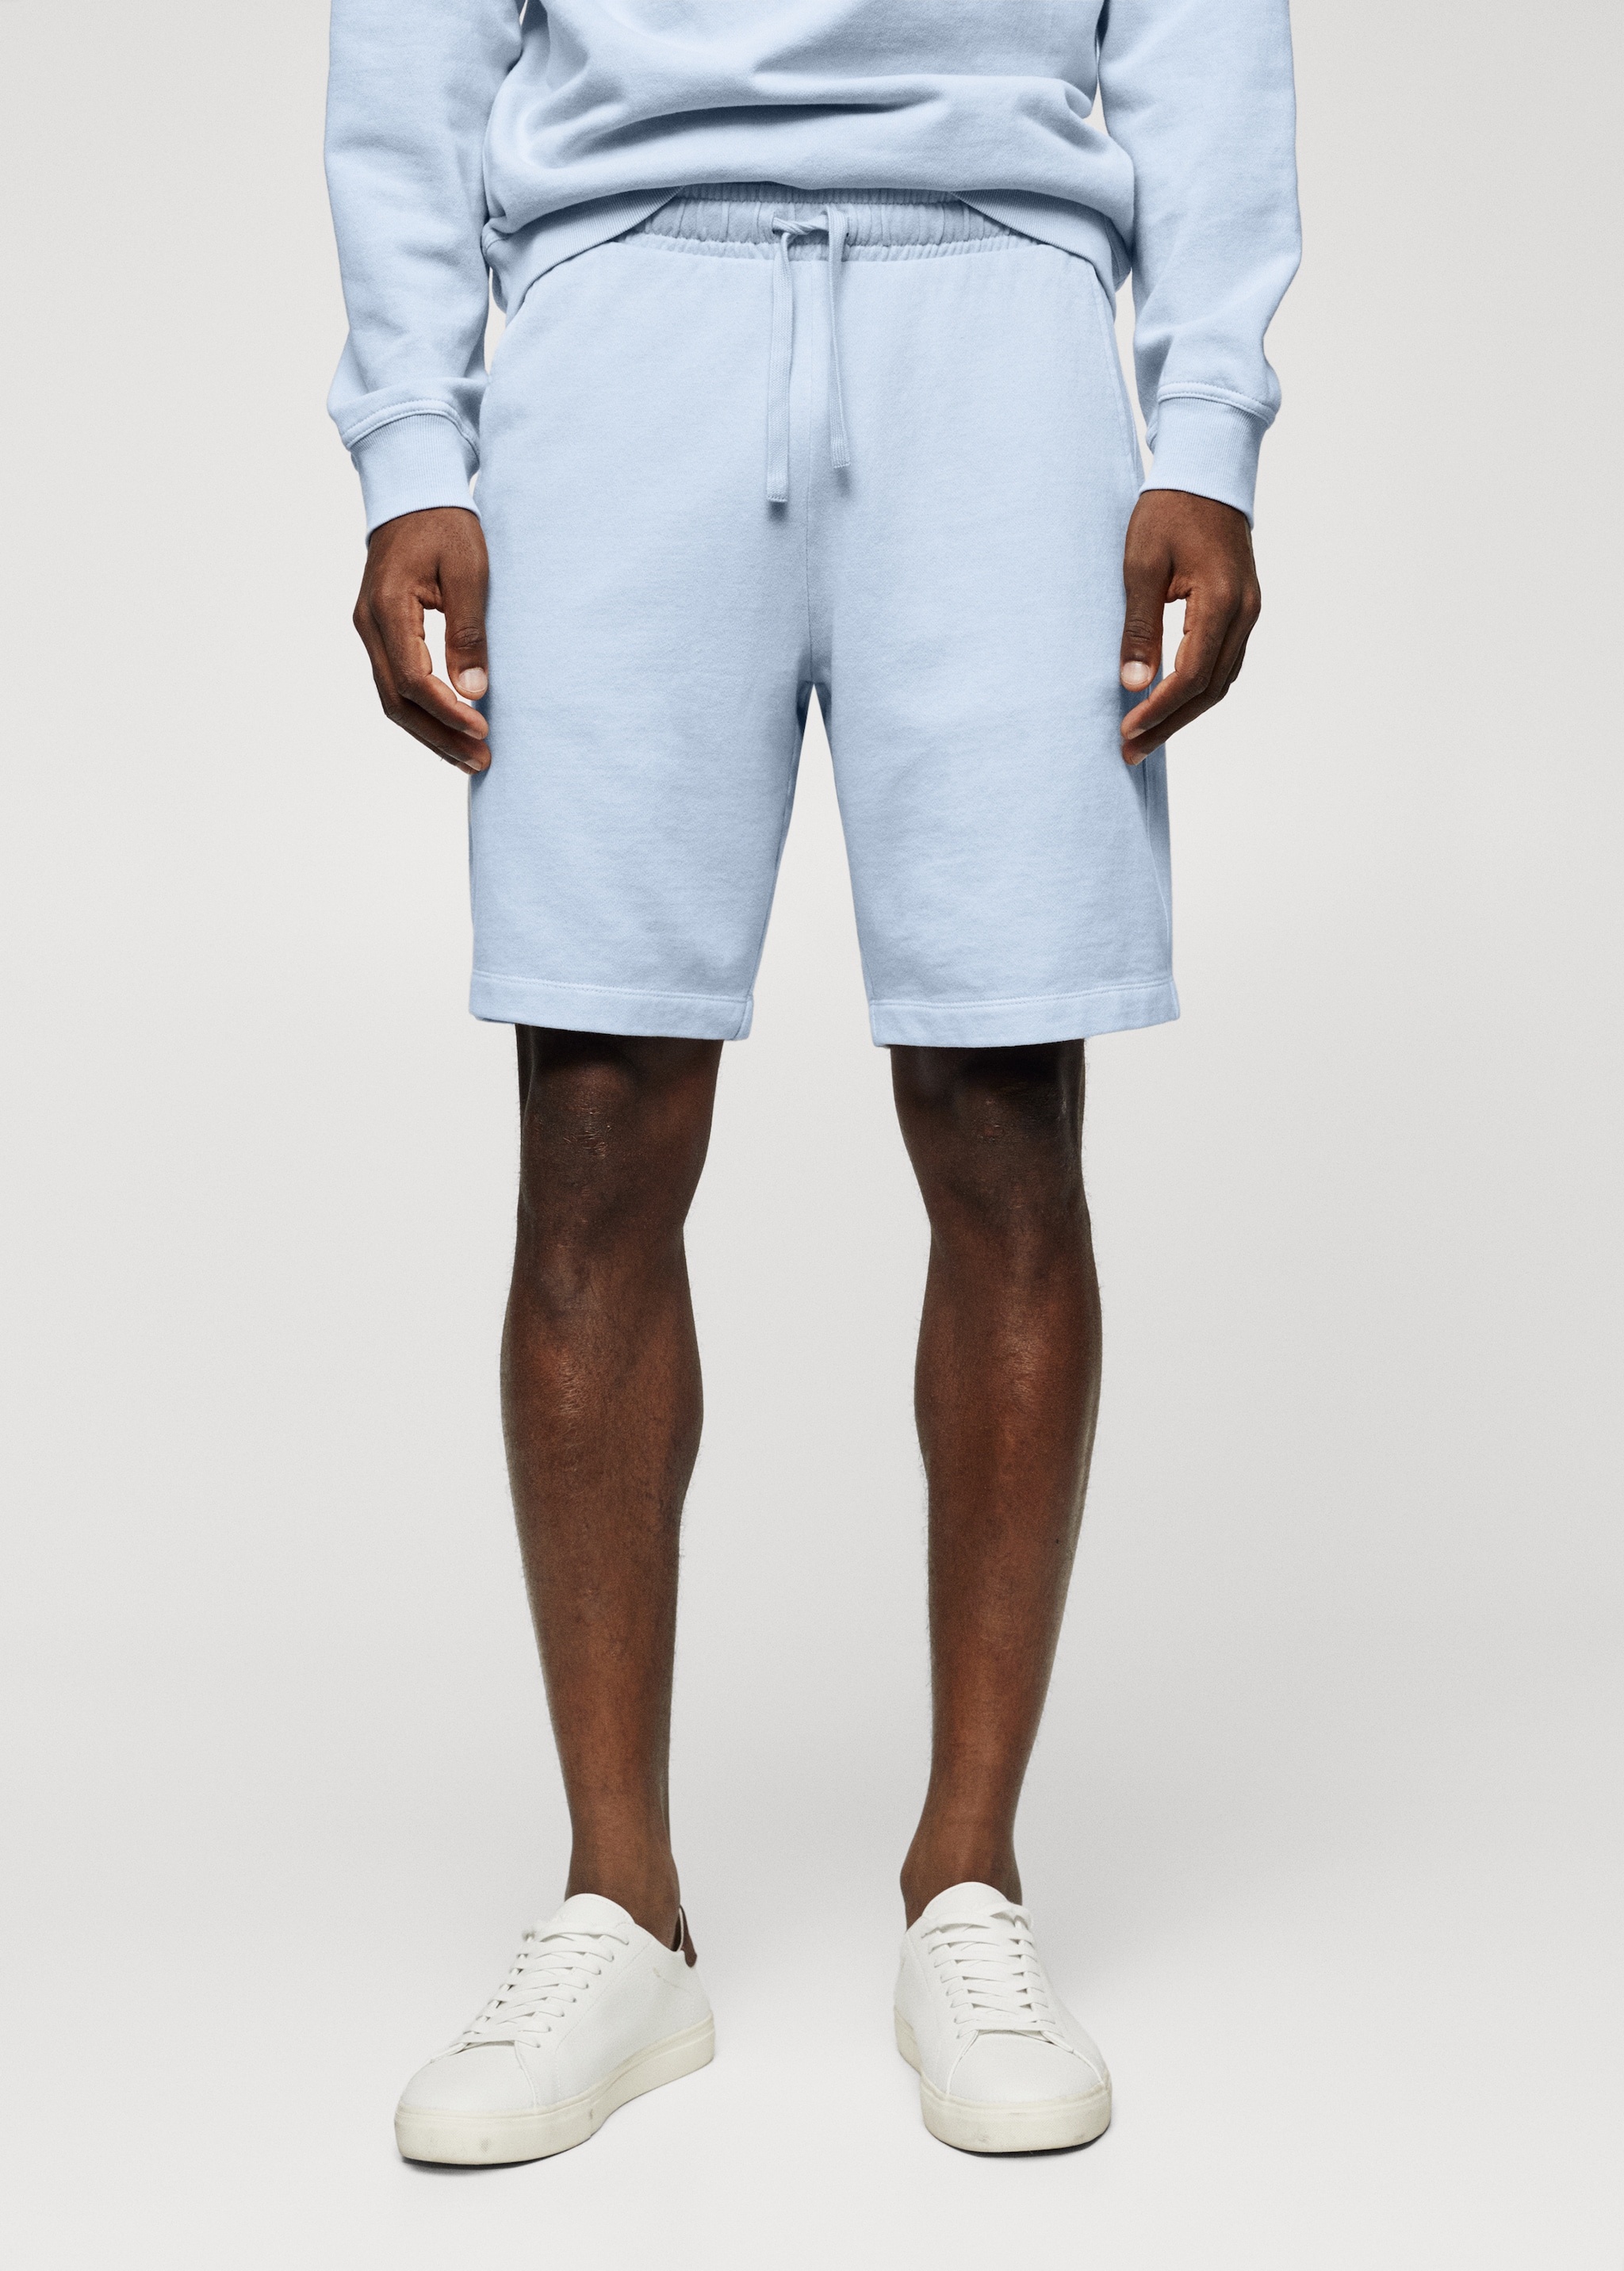 Dyed cotton jogging shorts - Medium plane